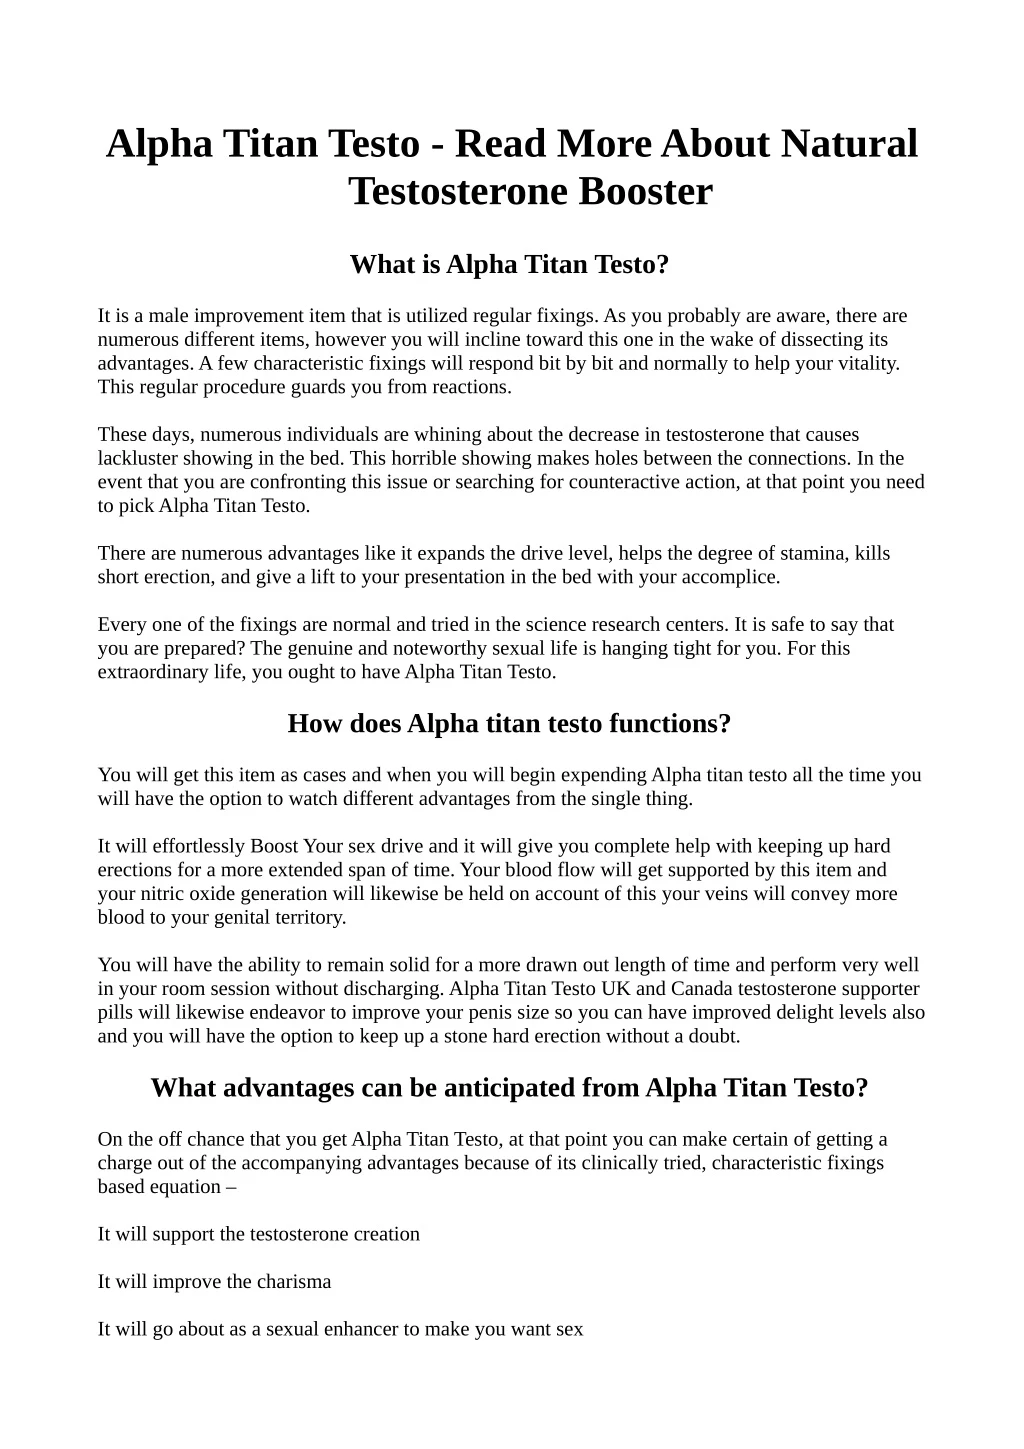 alpha titan testo read more about natural